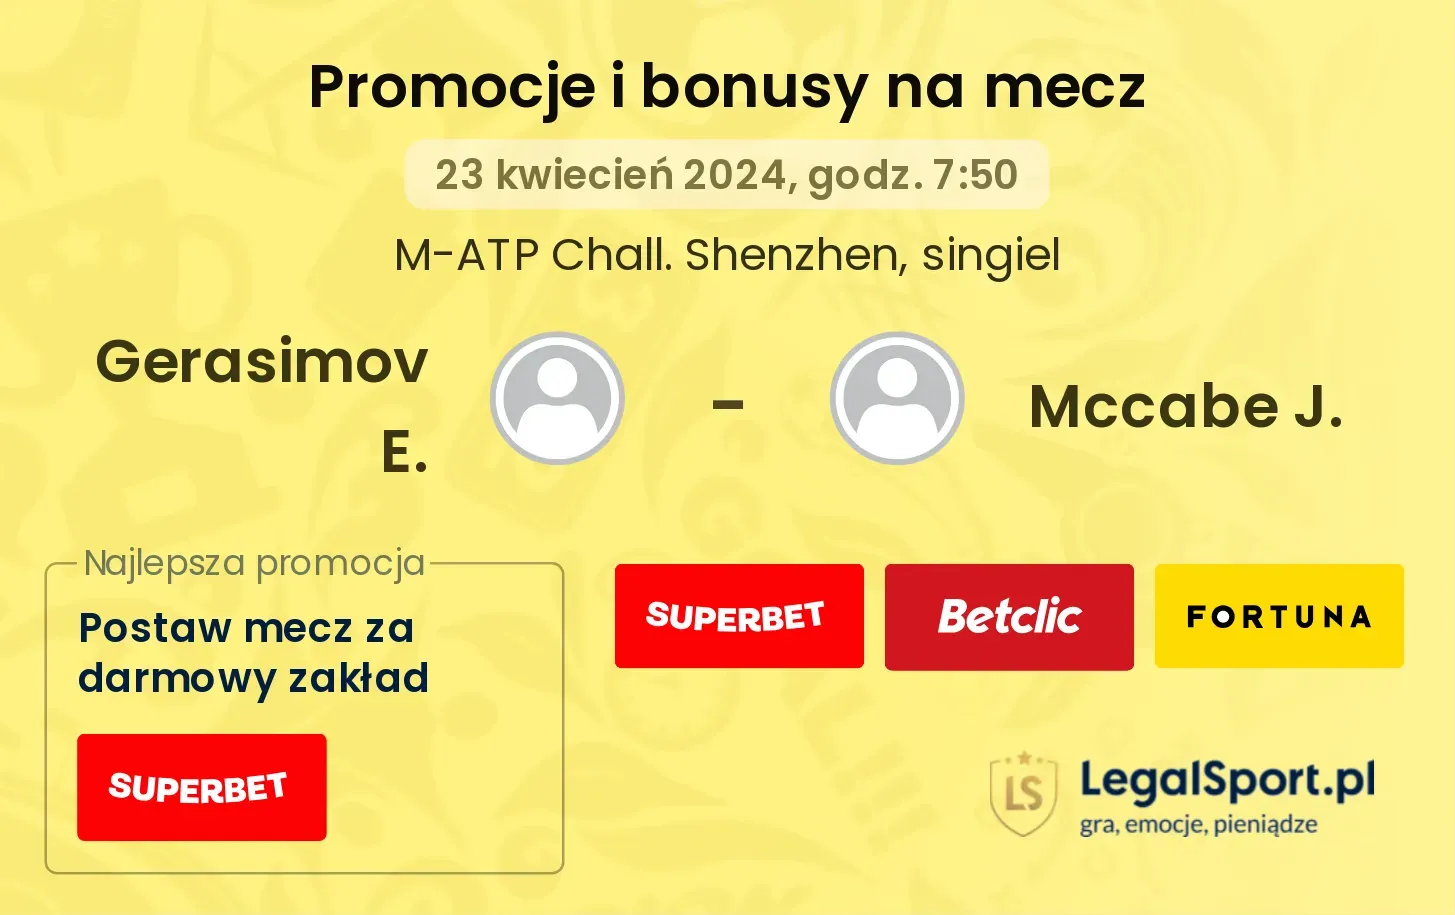 Gerasimov E. - Mccabe J. promocje bonusy na mecz